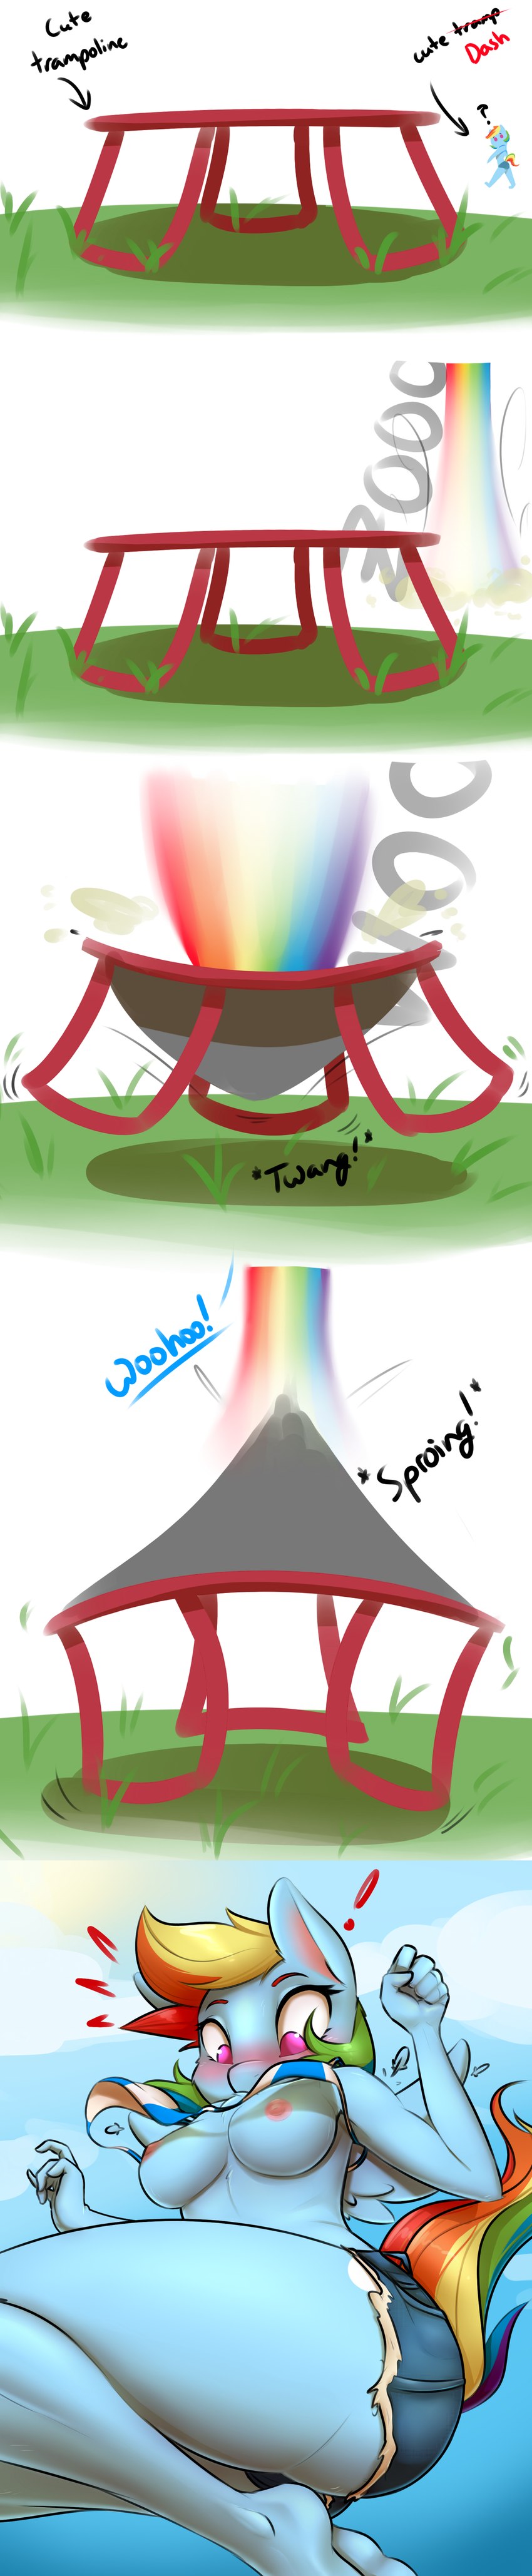 rainbow dash (friendship is magic and etc) created by pudgeruffian